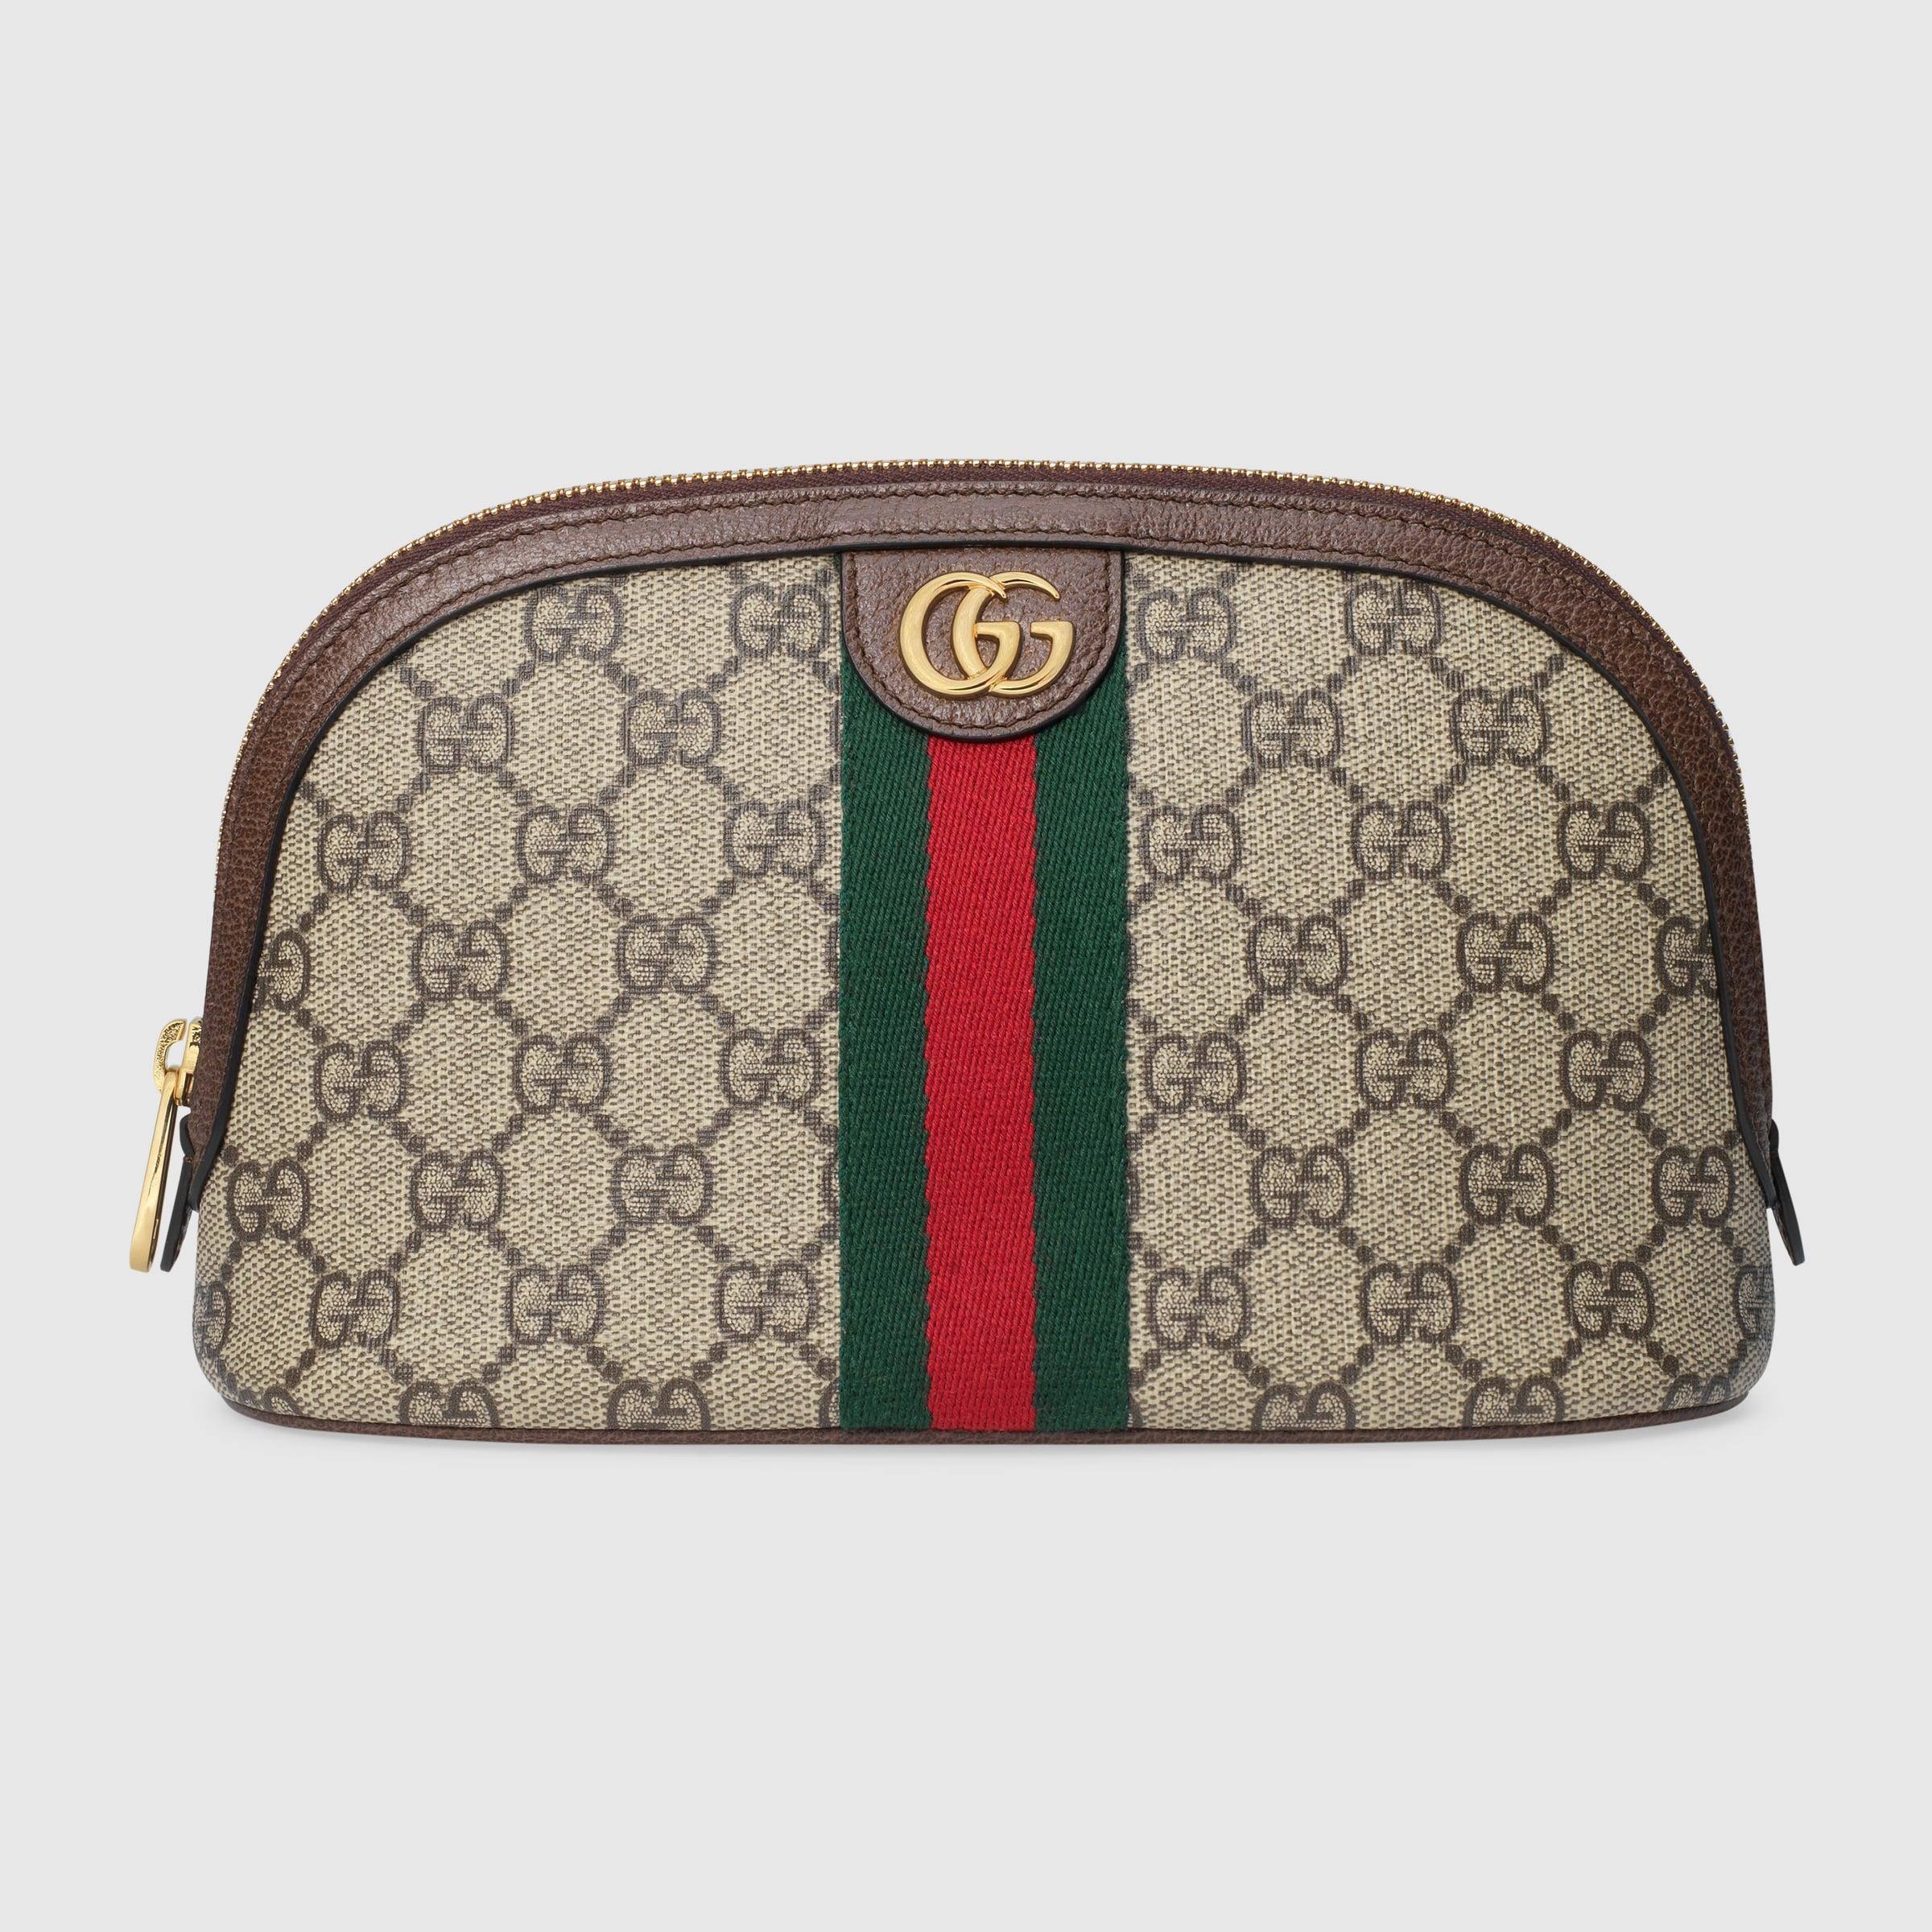 Gucci Ophidia GG Cosmetic Case - Farfetch